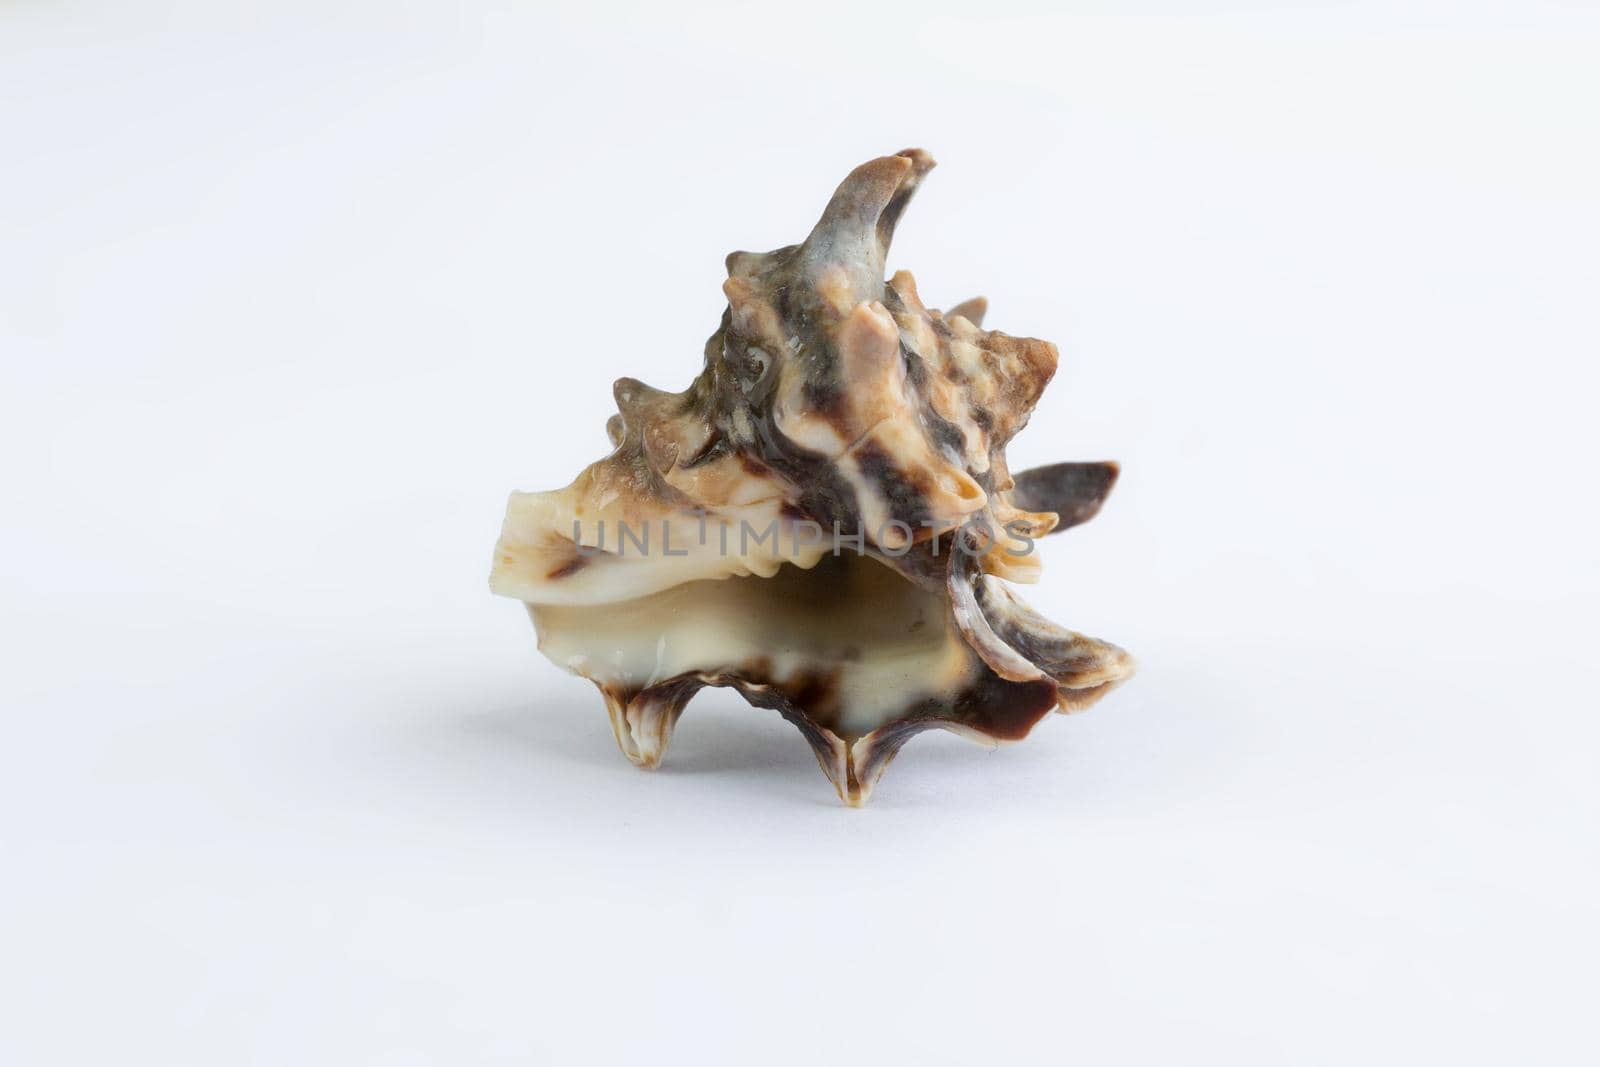 Marine life: light spiny itchy gastropod seashell close-up on white by VeraVerano